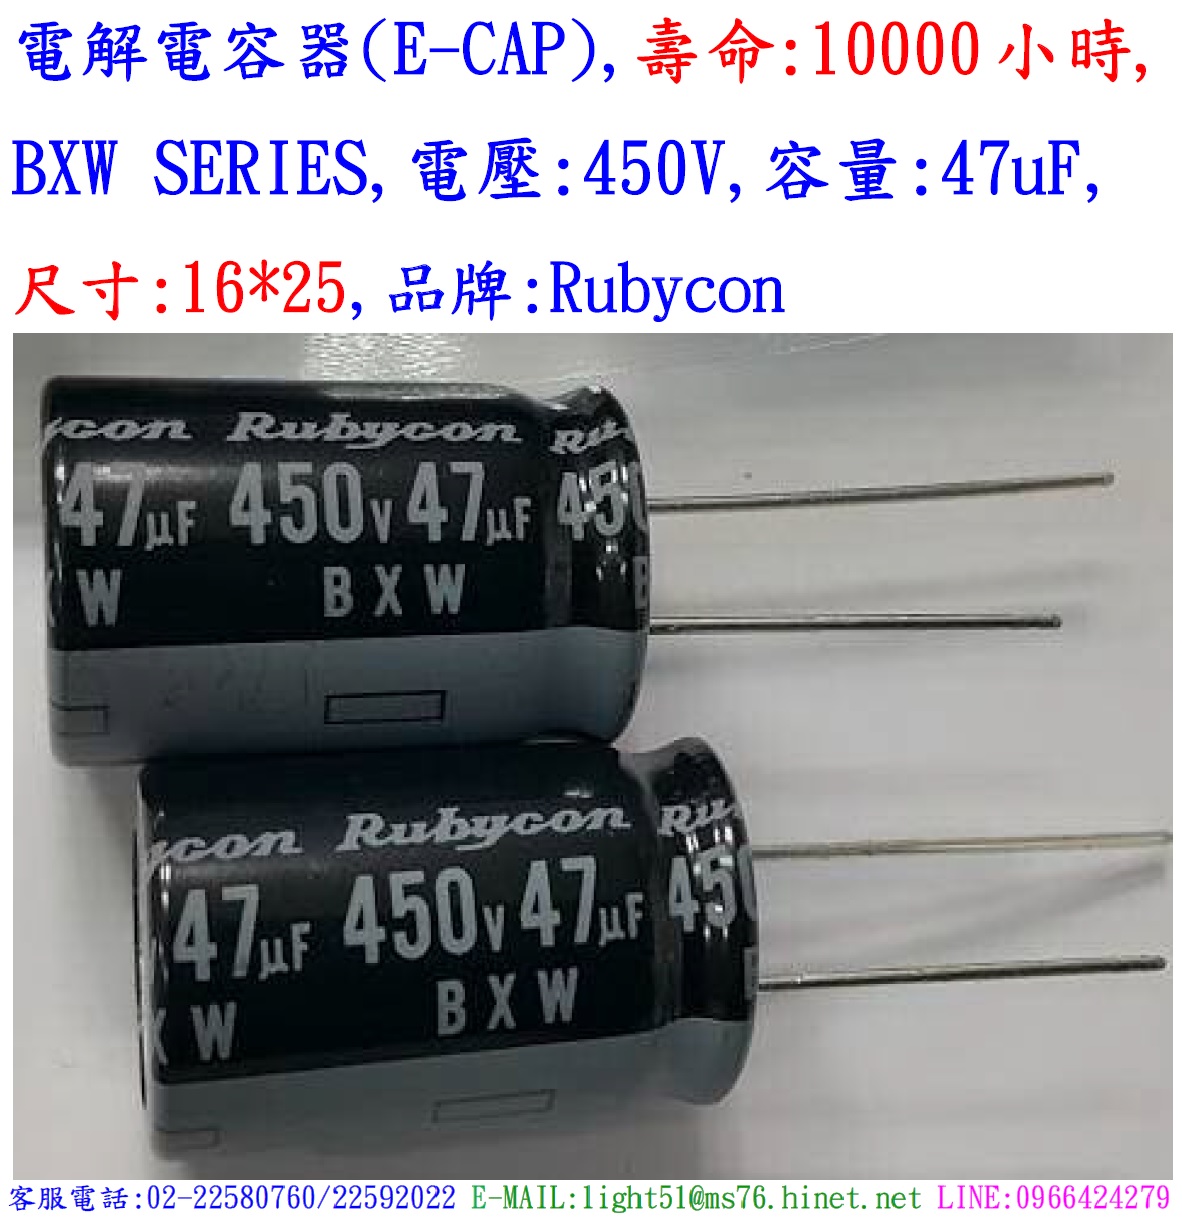 BXW,450V,47uF,尺寸:16*25,電解電容器,壽命:10000小時,Rubycon